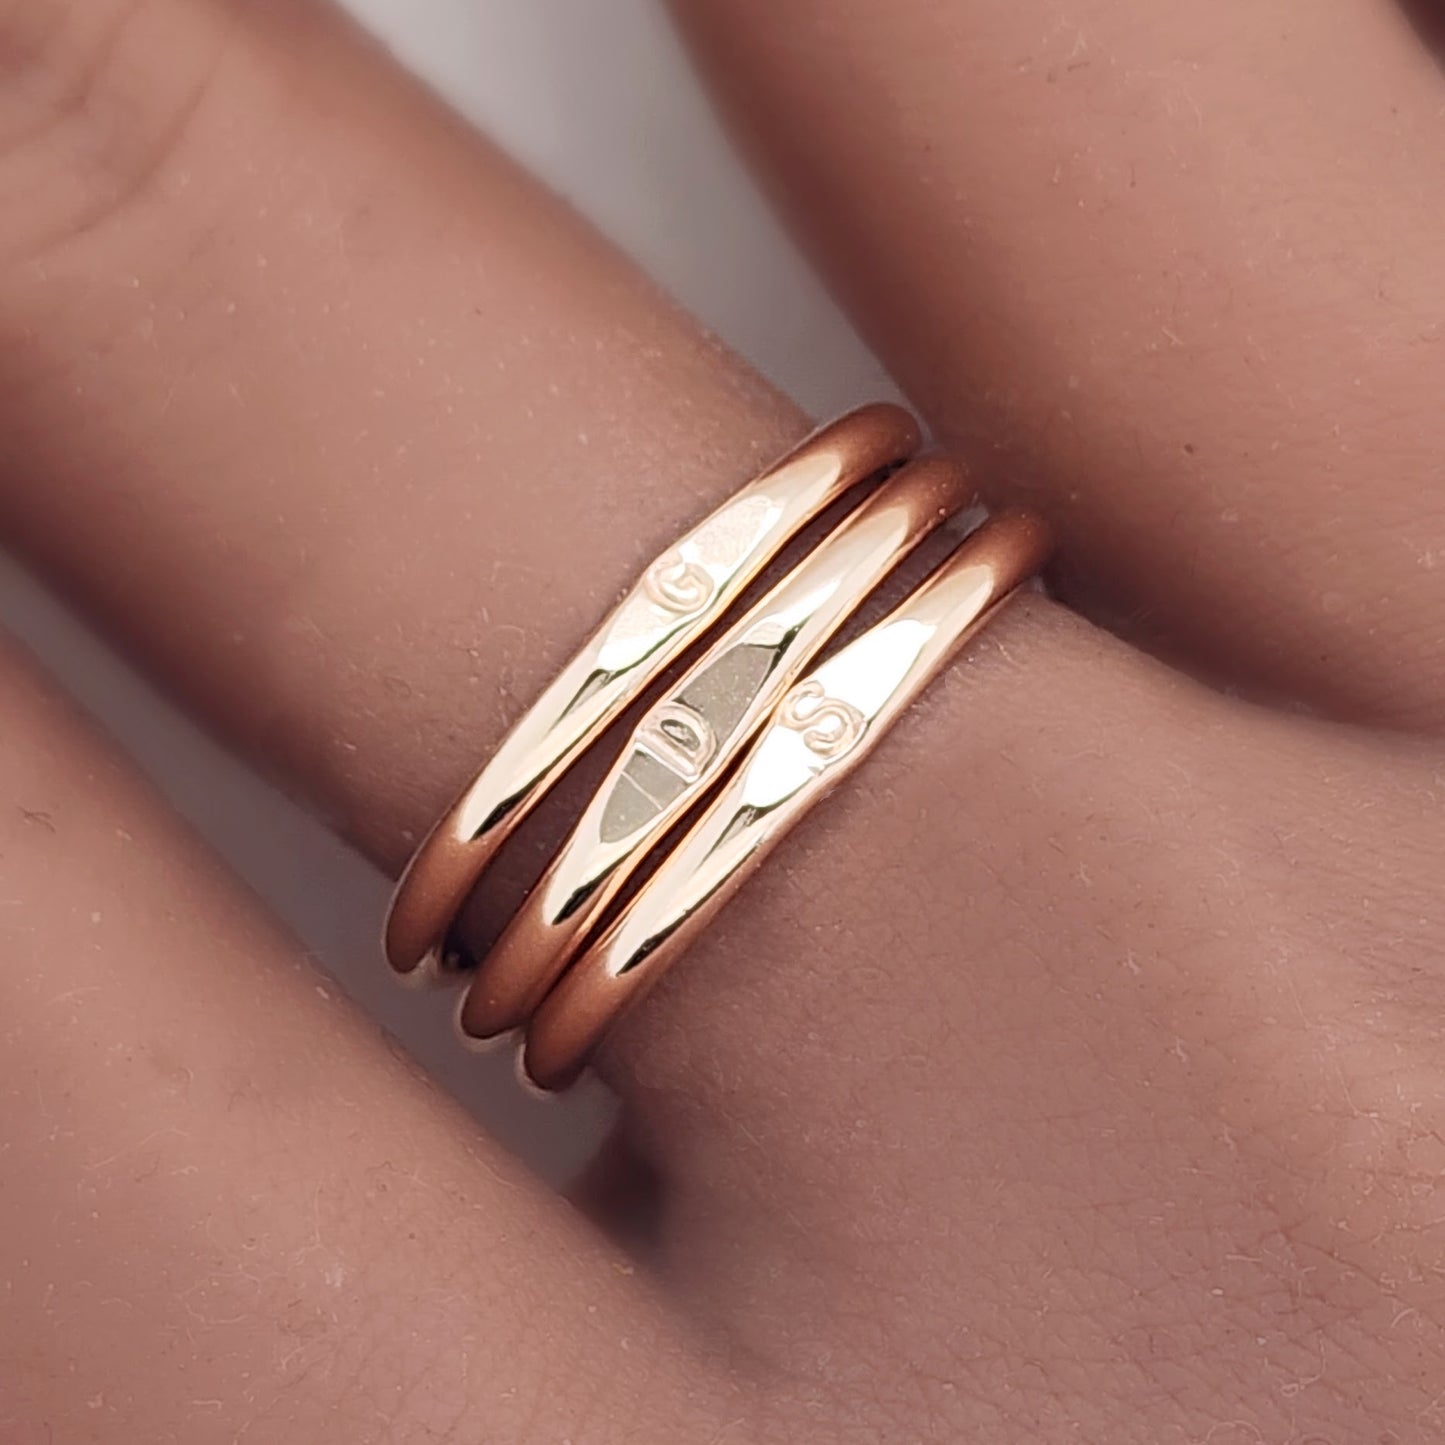 Minimal Initial Signet Ring - Going Golden